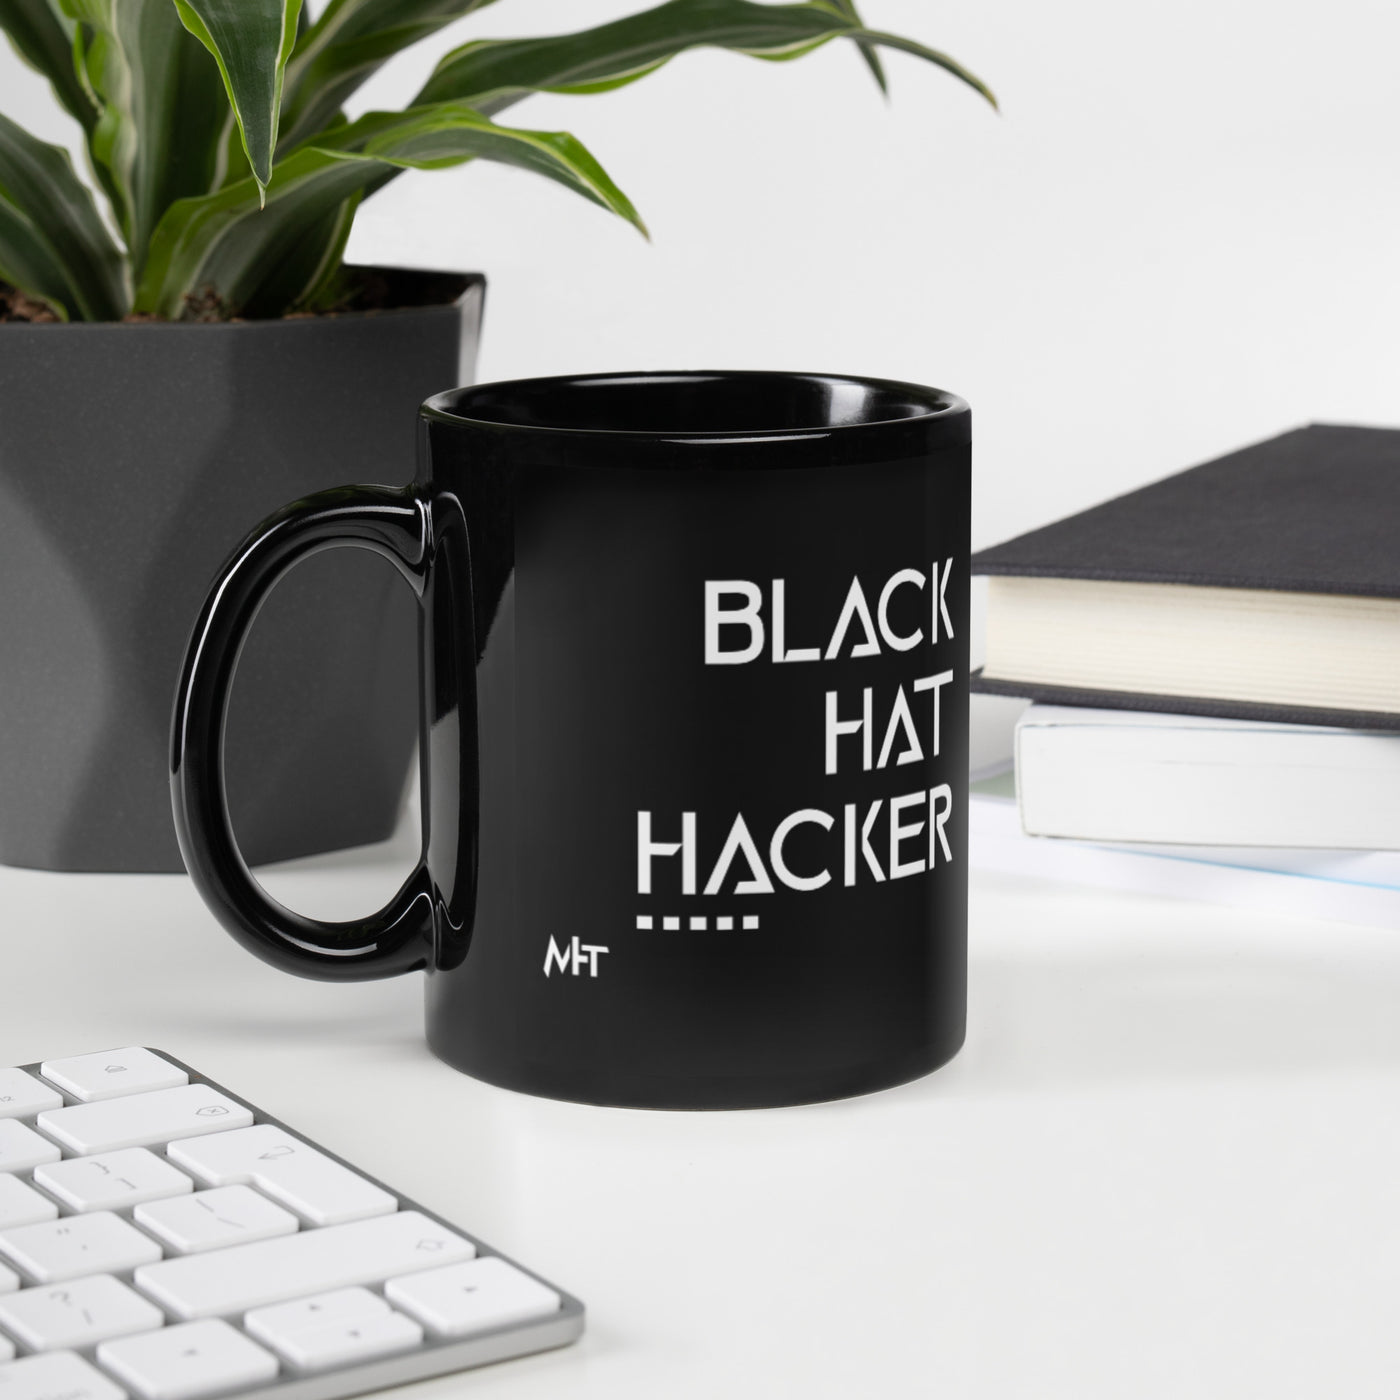 Black Hat Hacker v1 - Black Glossy Mug